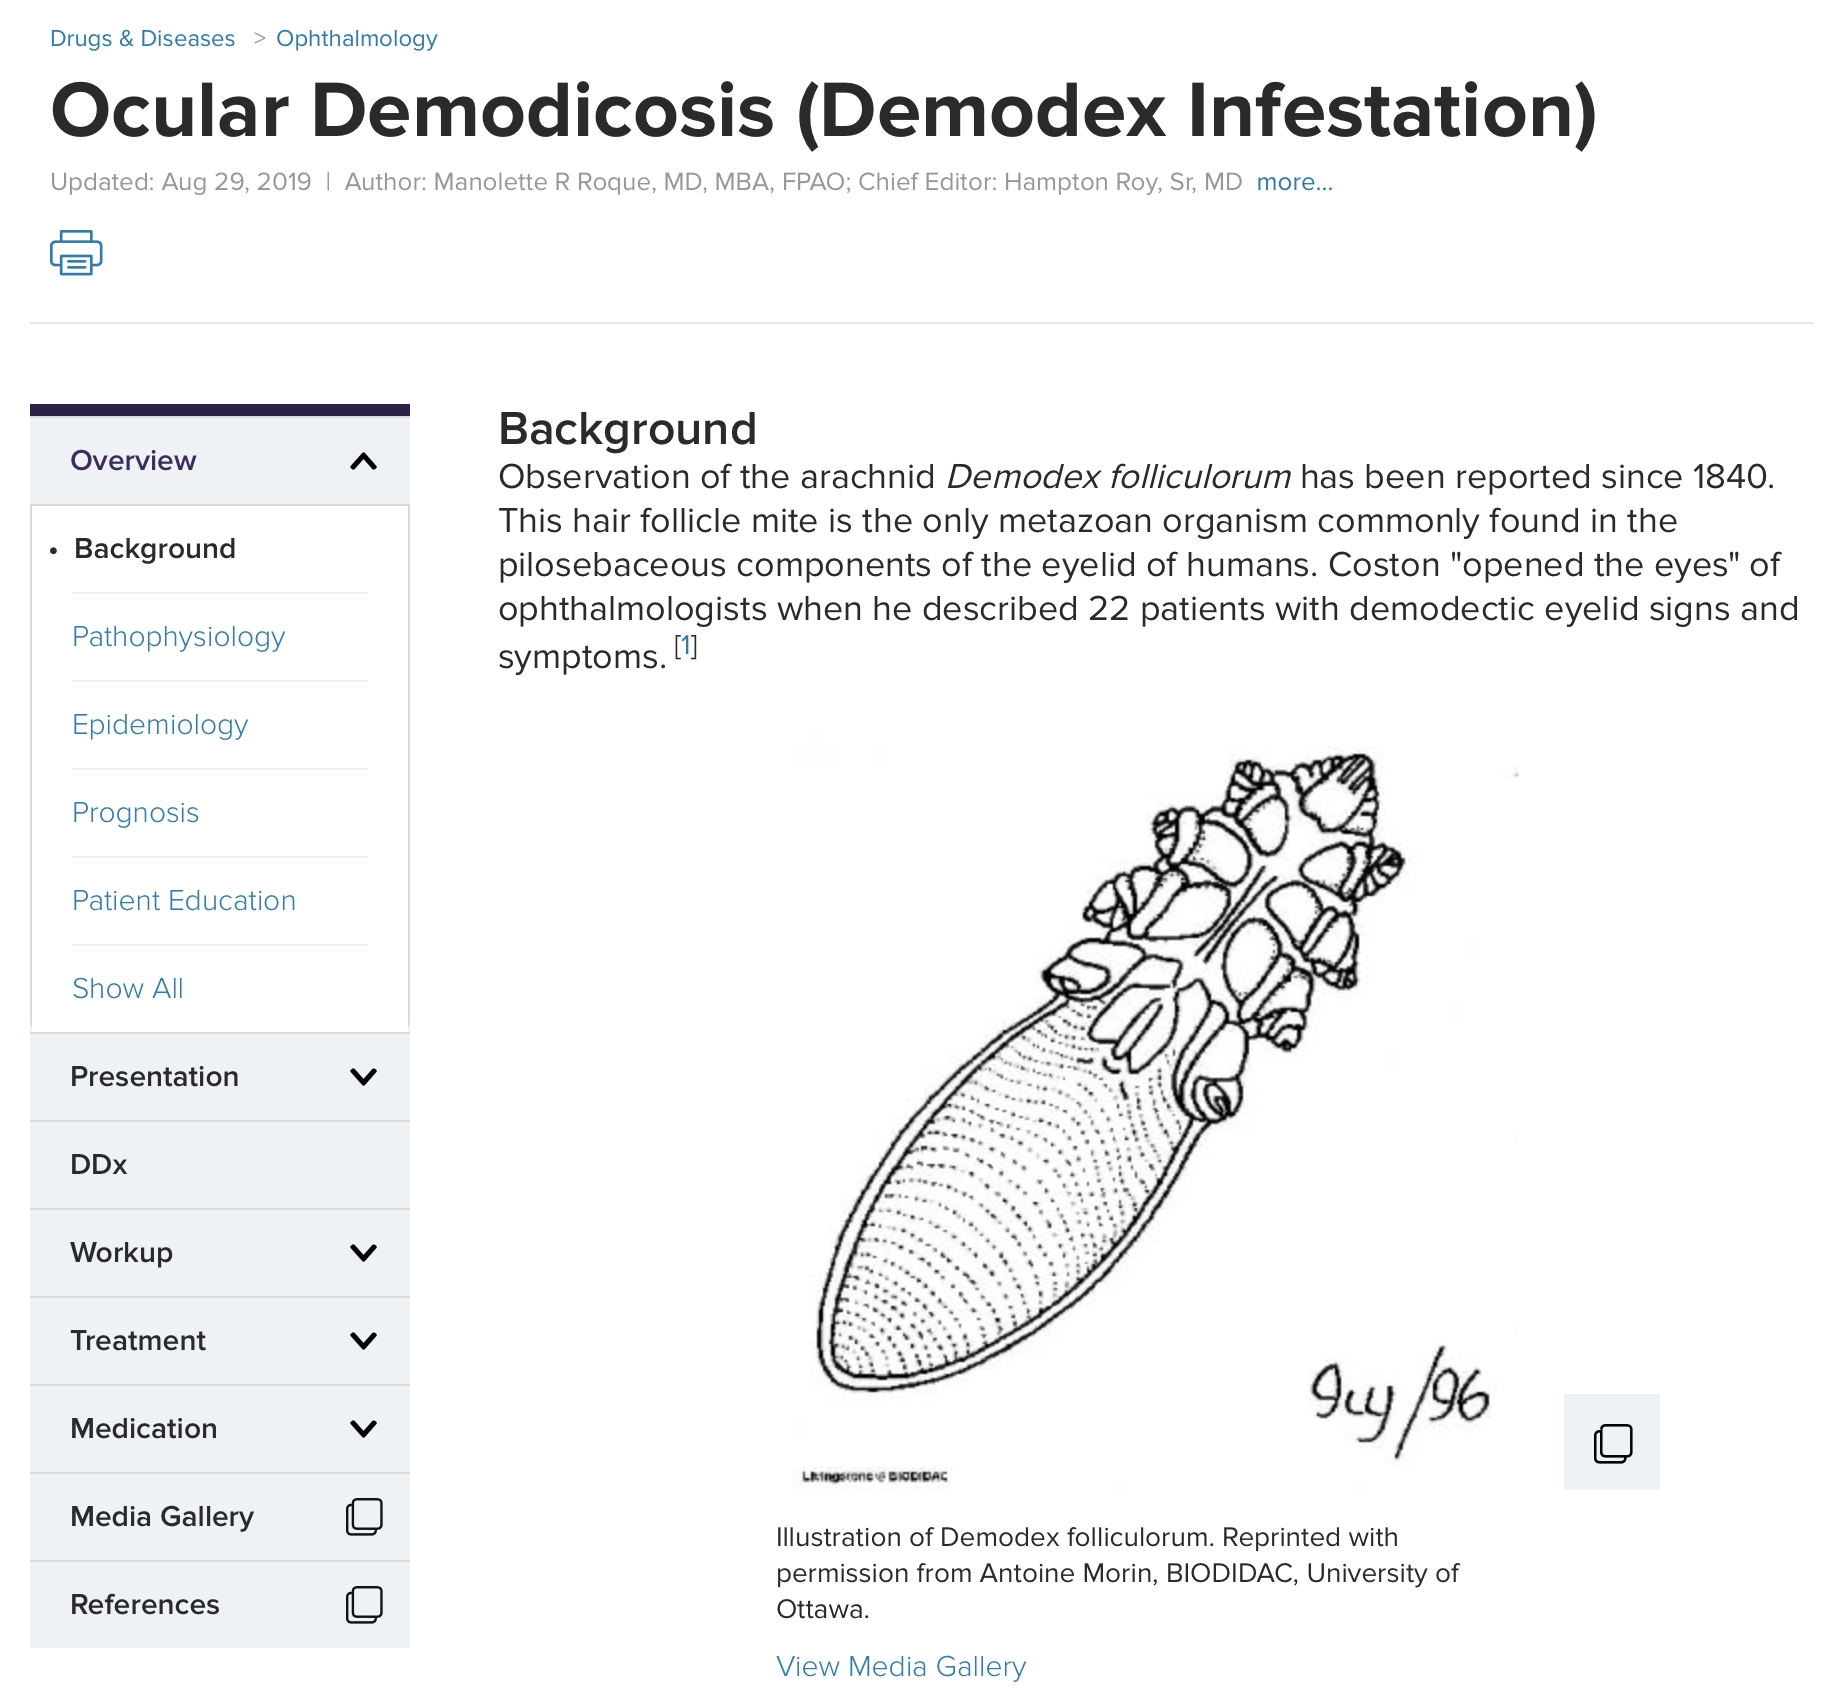 Ocular Demodicosis - Demodex Infestation